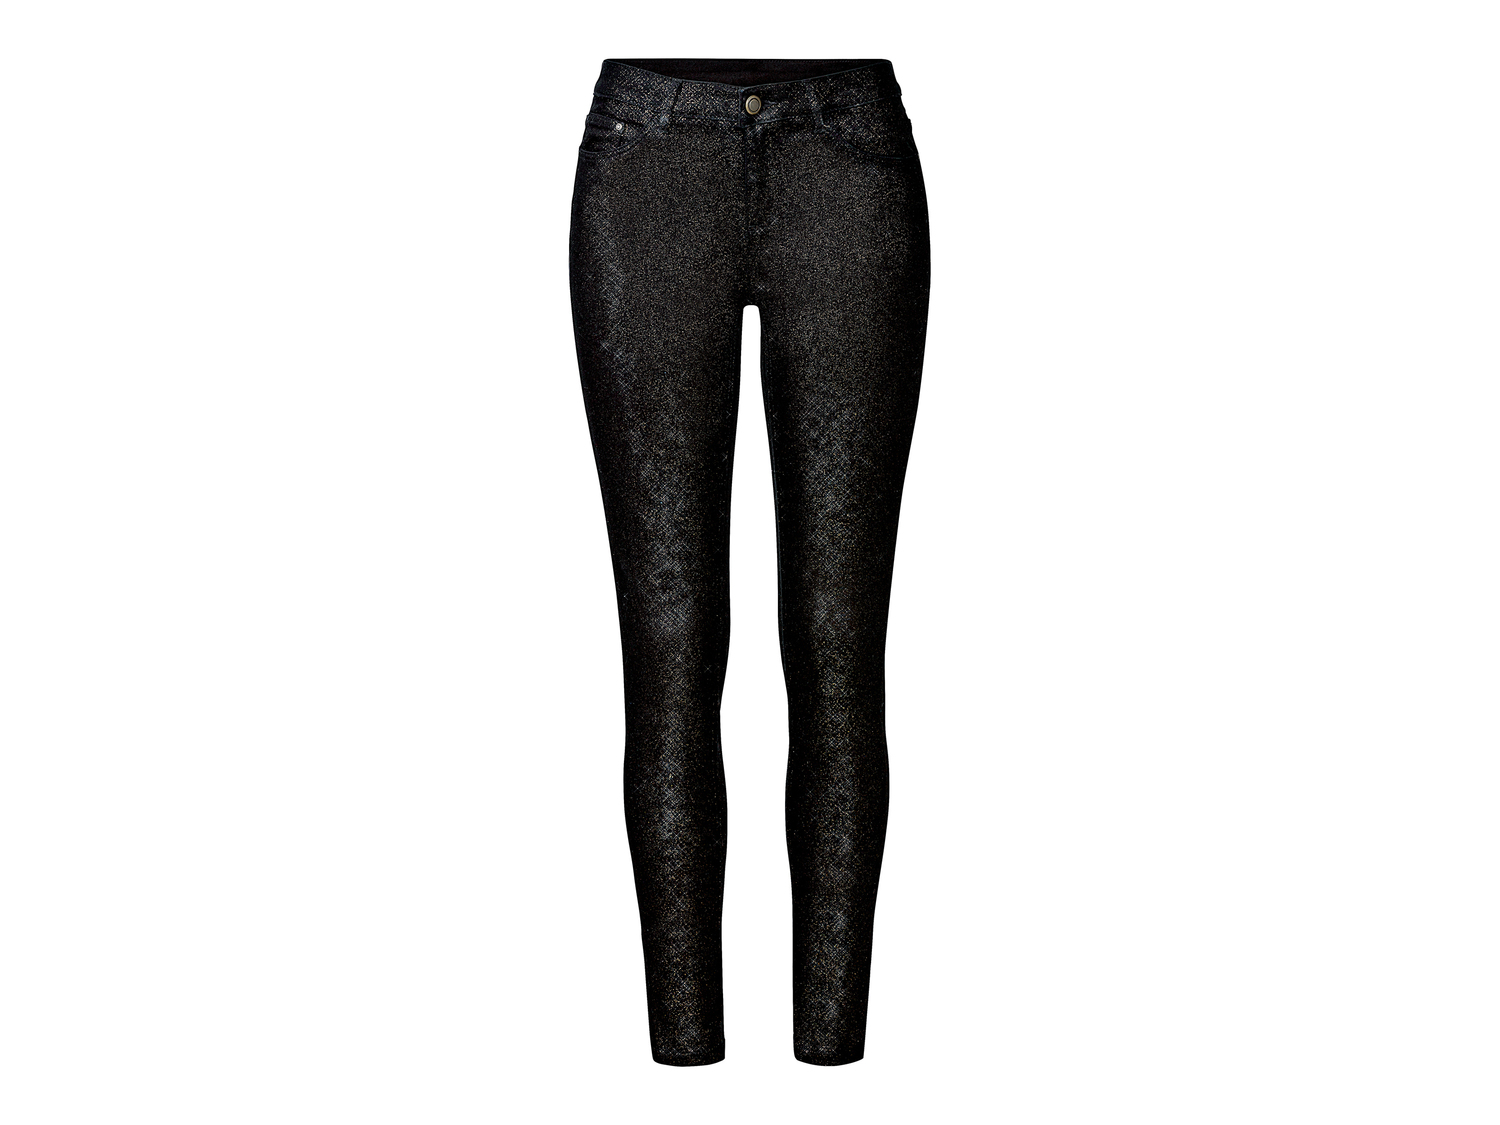 Jeans Super Skinny Fit da donna Esmara, prezzo 11.99 &#8364; 
Misure: 38-48
Taglie ...